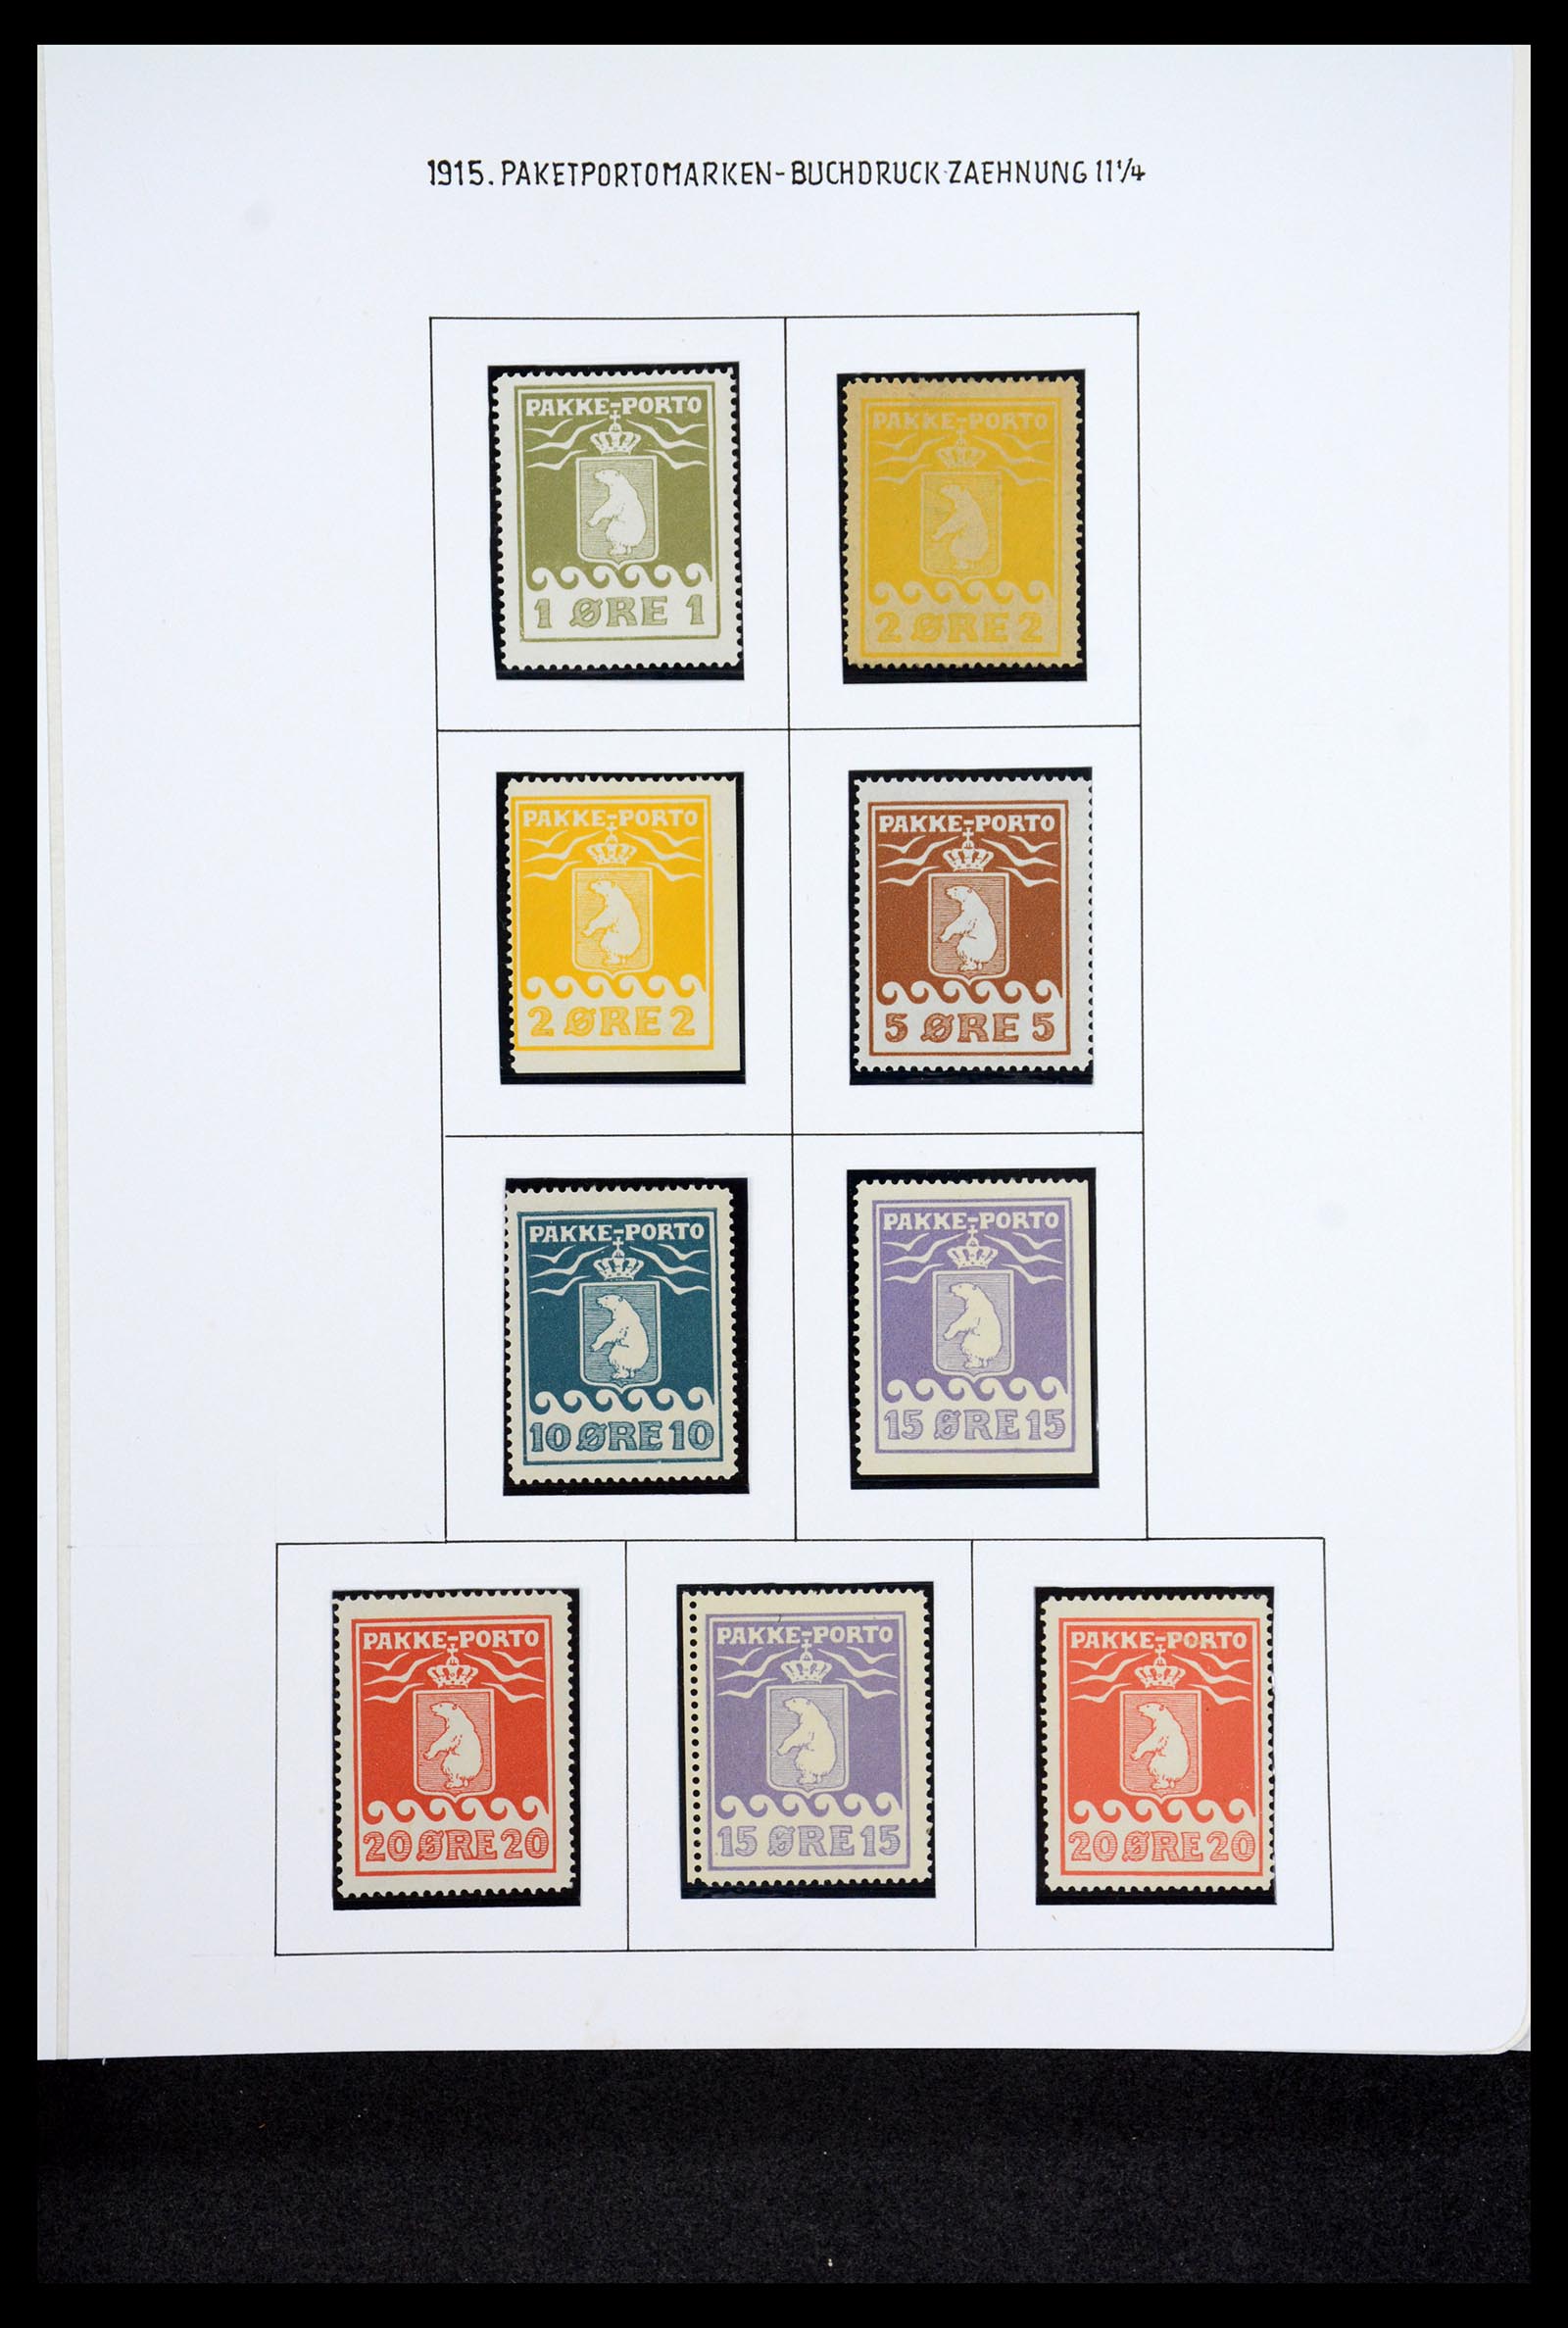 36748 002 - Stamp collection 36748 Greenland pakke-porto 1905-1930.